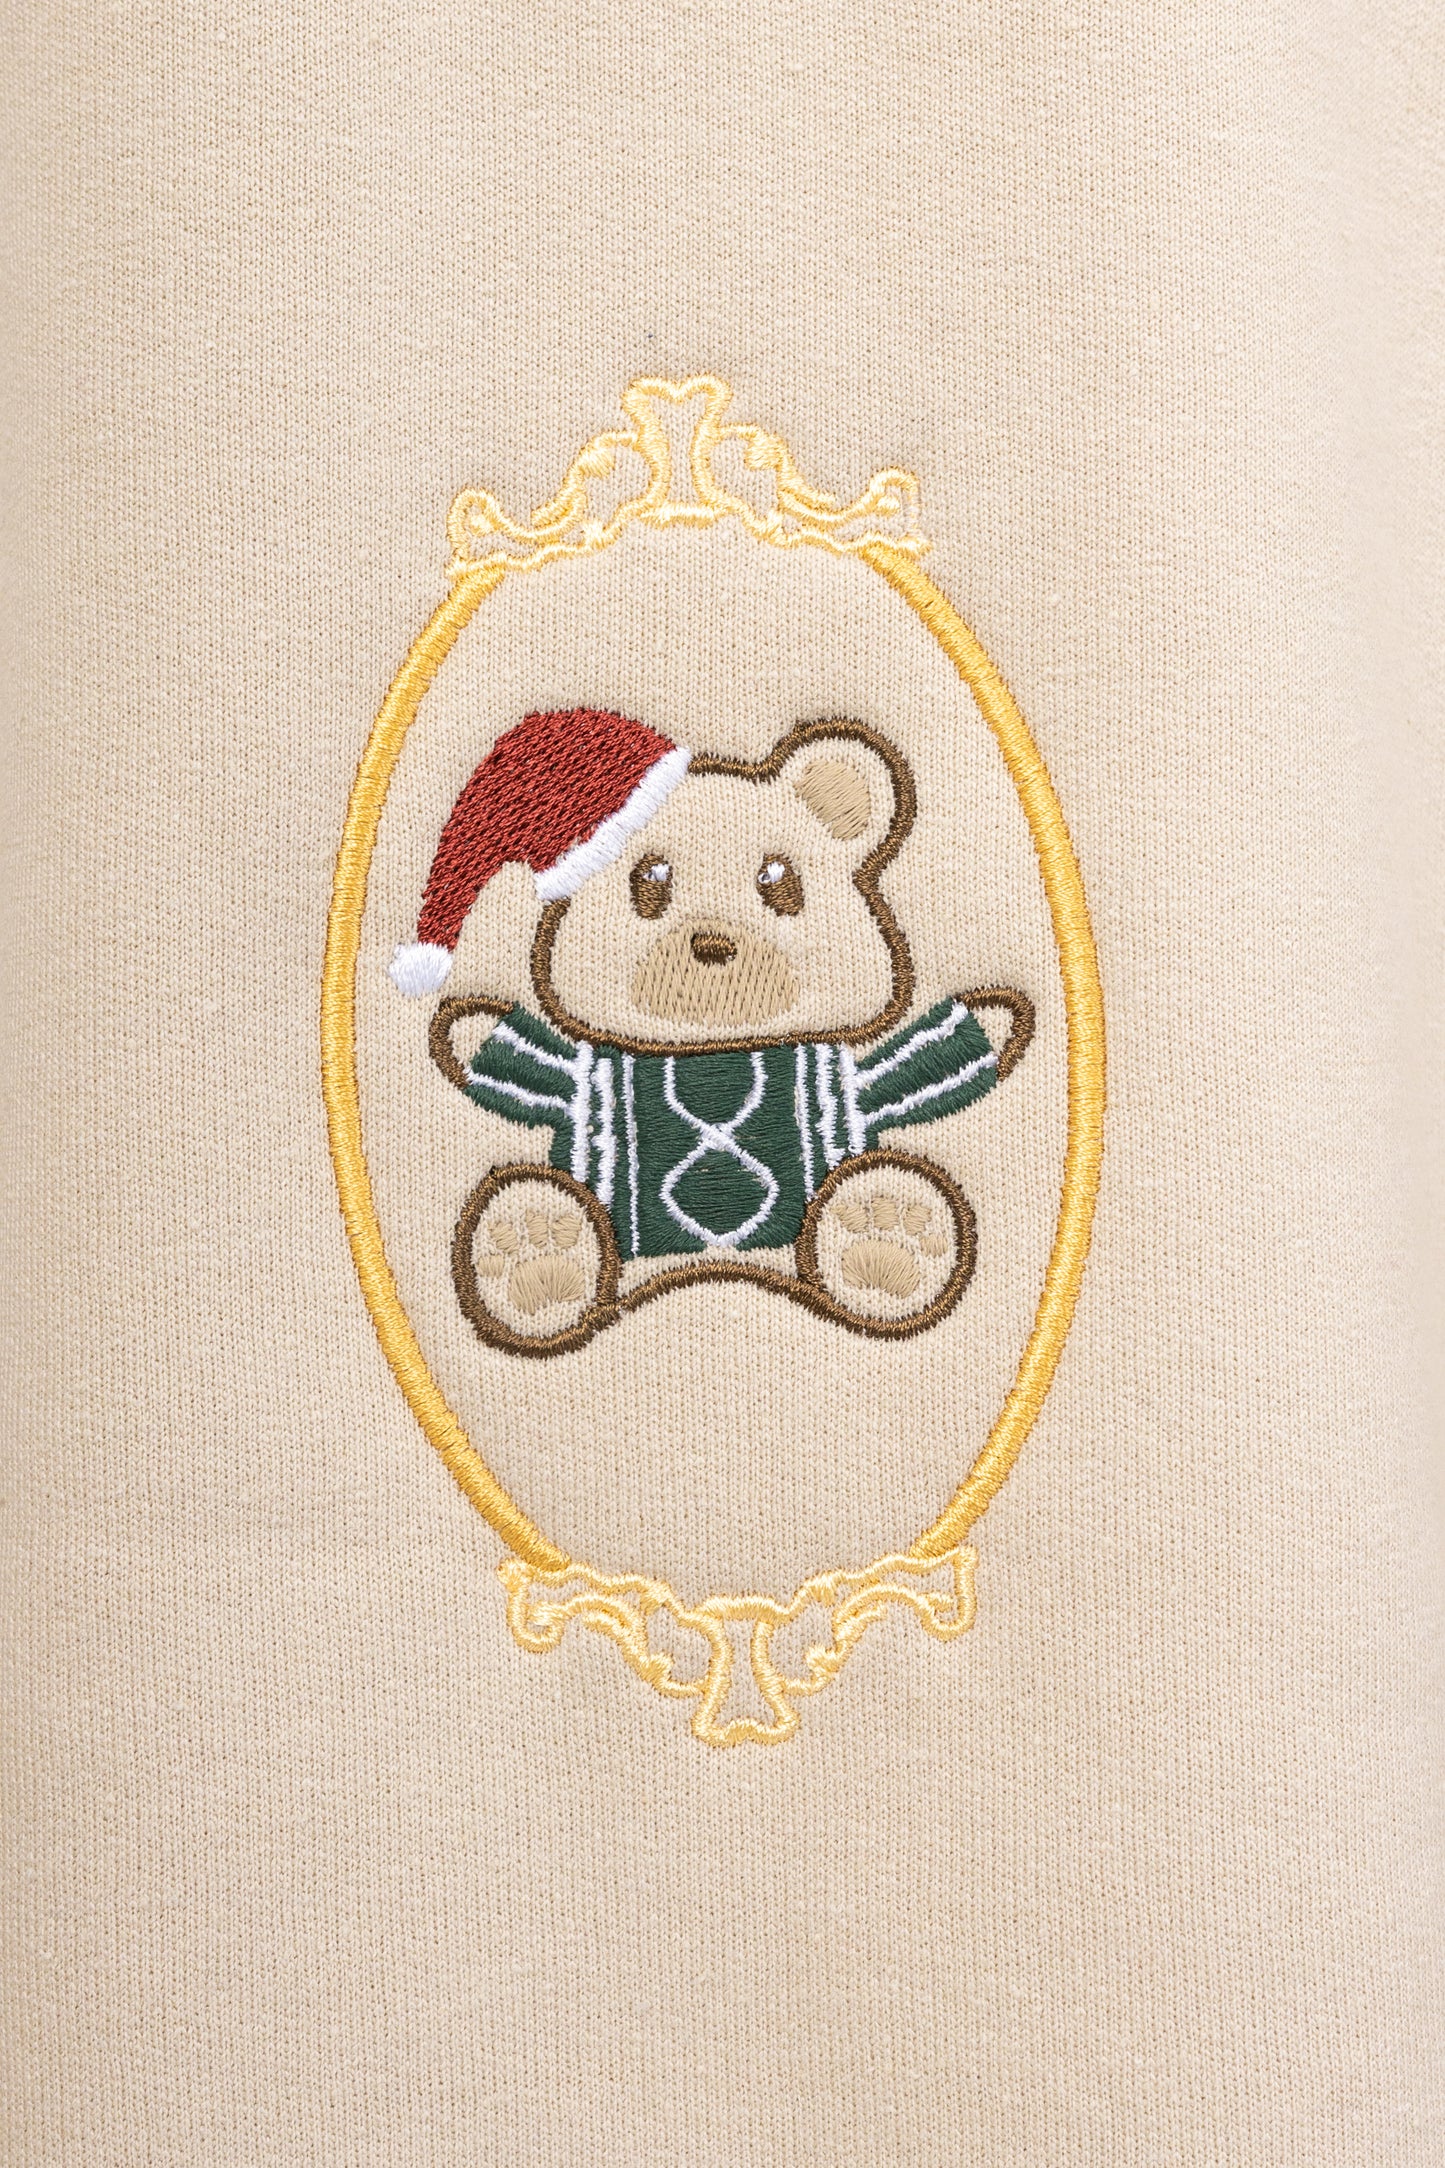 A 90's Christmas Bear Sweatshirt